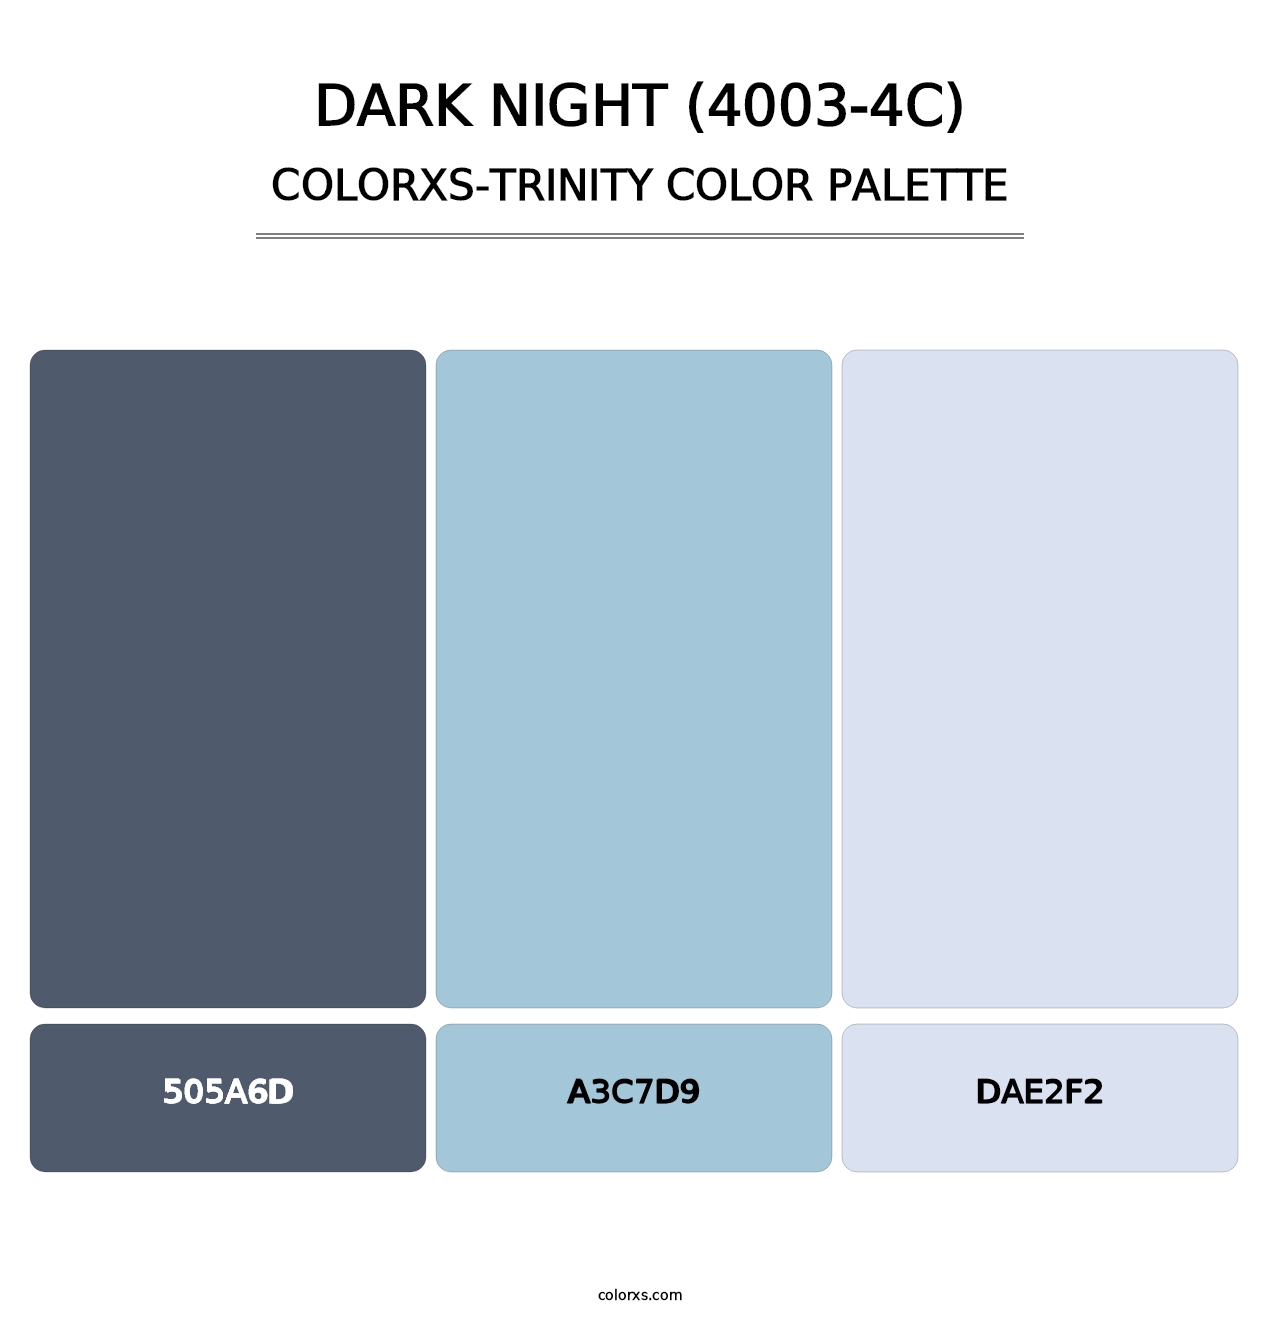 Dark Night (4003-4C) - Colorxs Trinity Palette